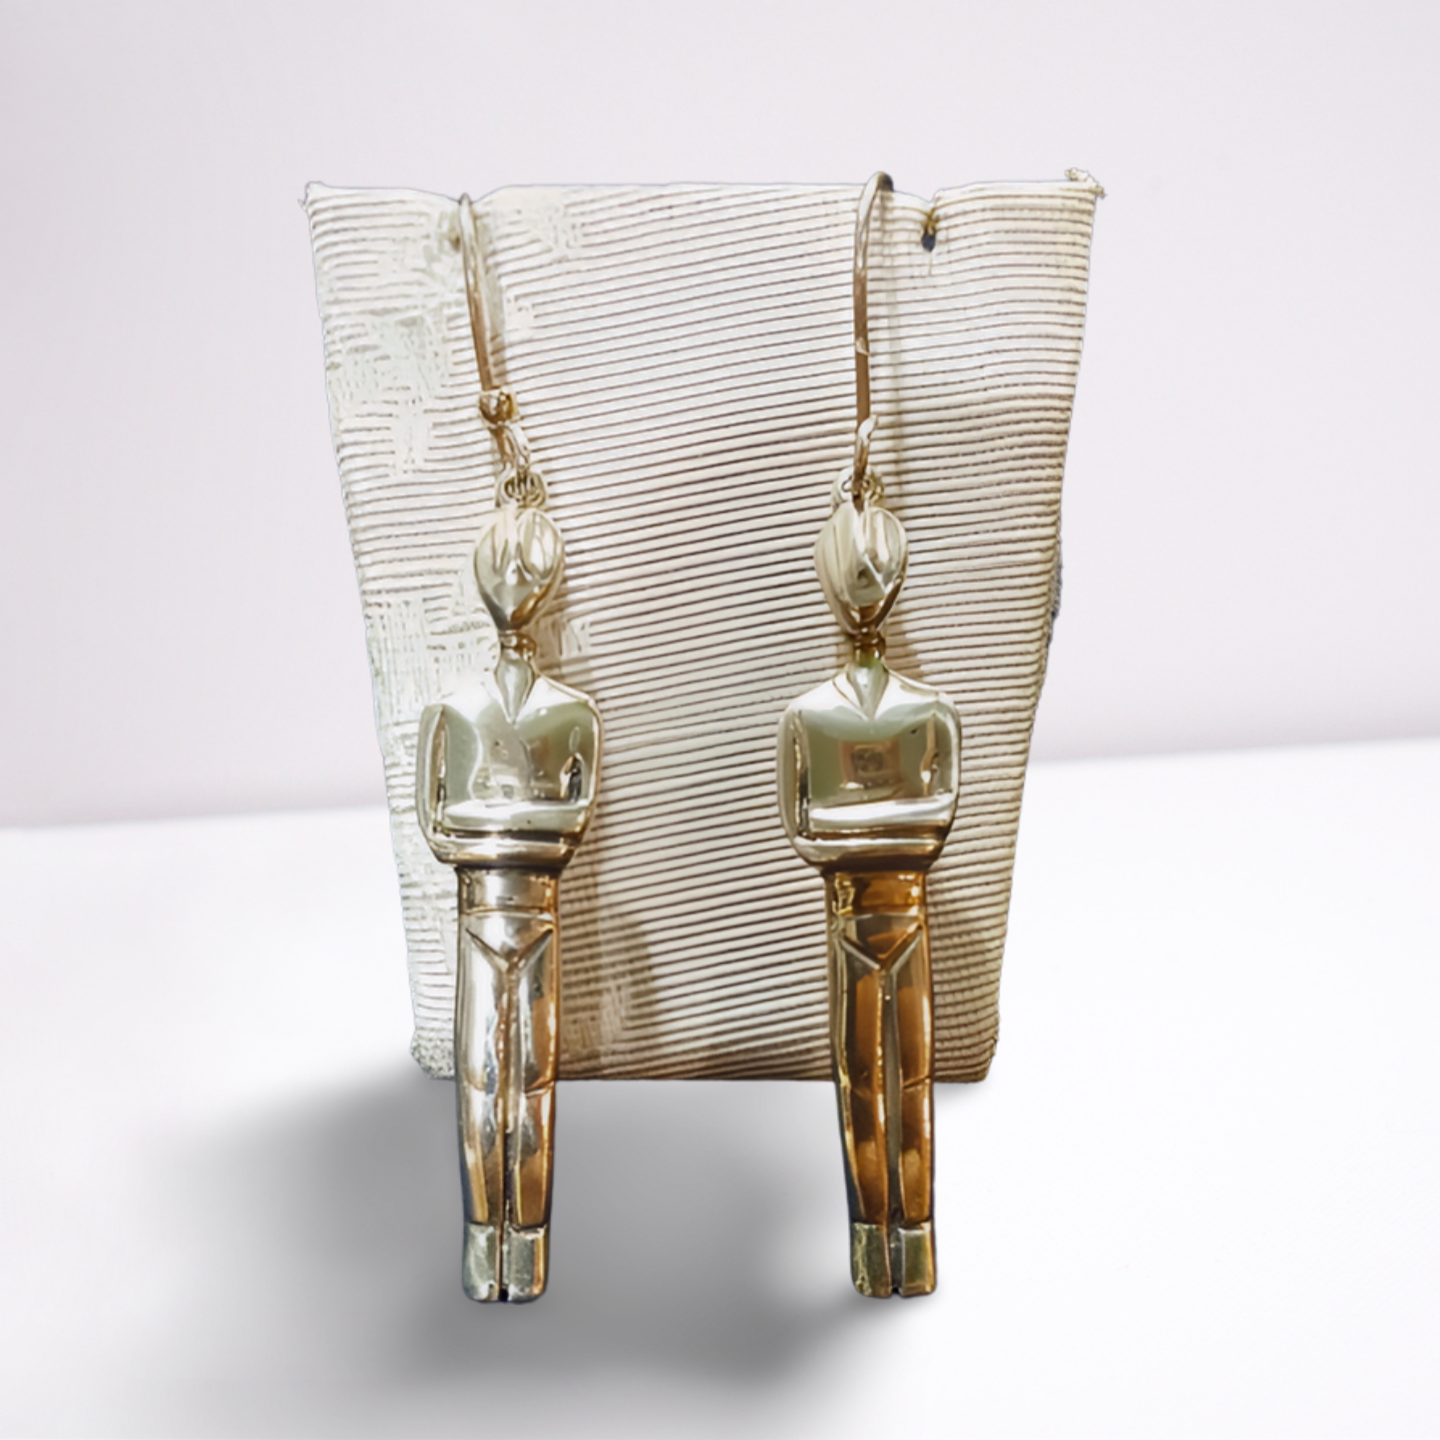 Greek Cycladic earrings, Cycladic jewelry, earrings in sterling silver, Standing female figure (Keros Variety) earrings (AG-11)